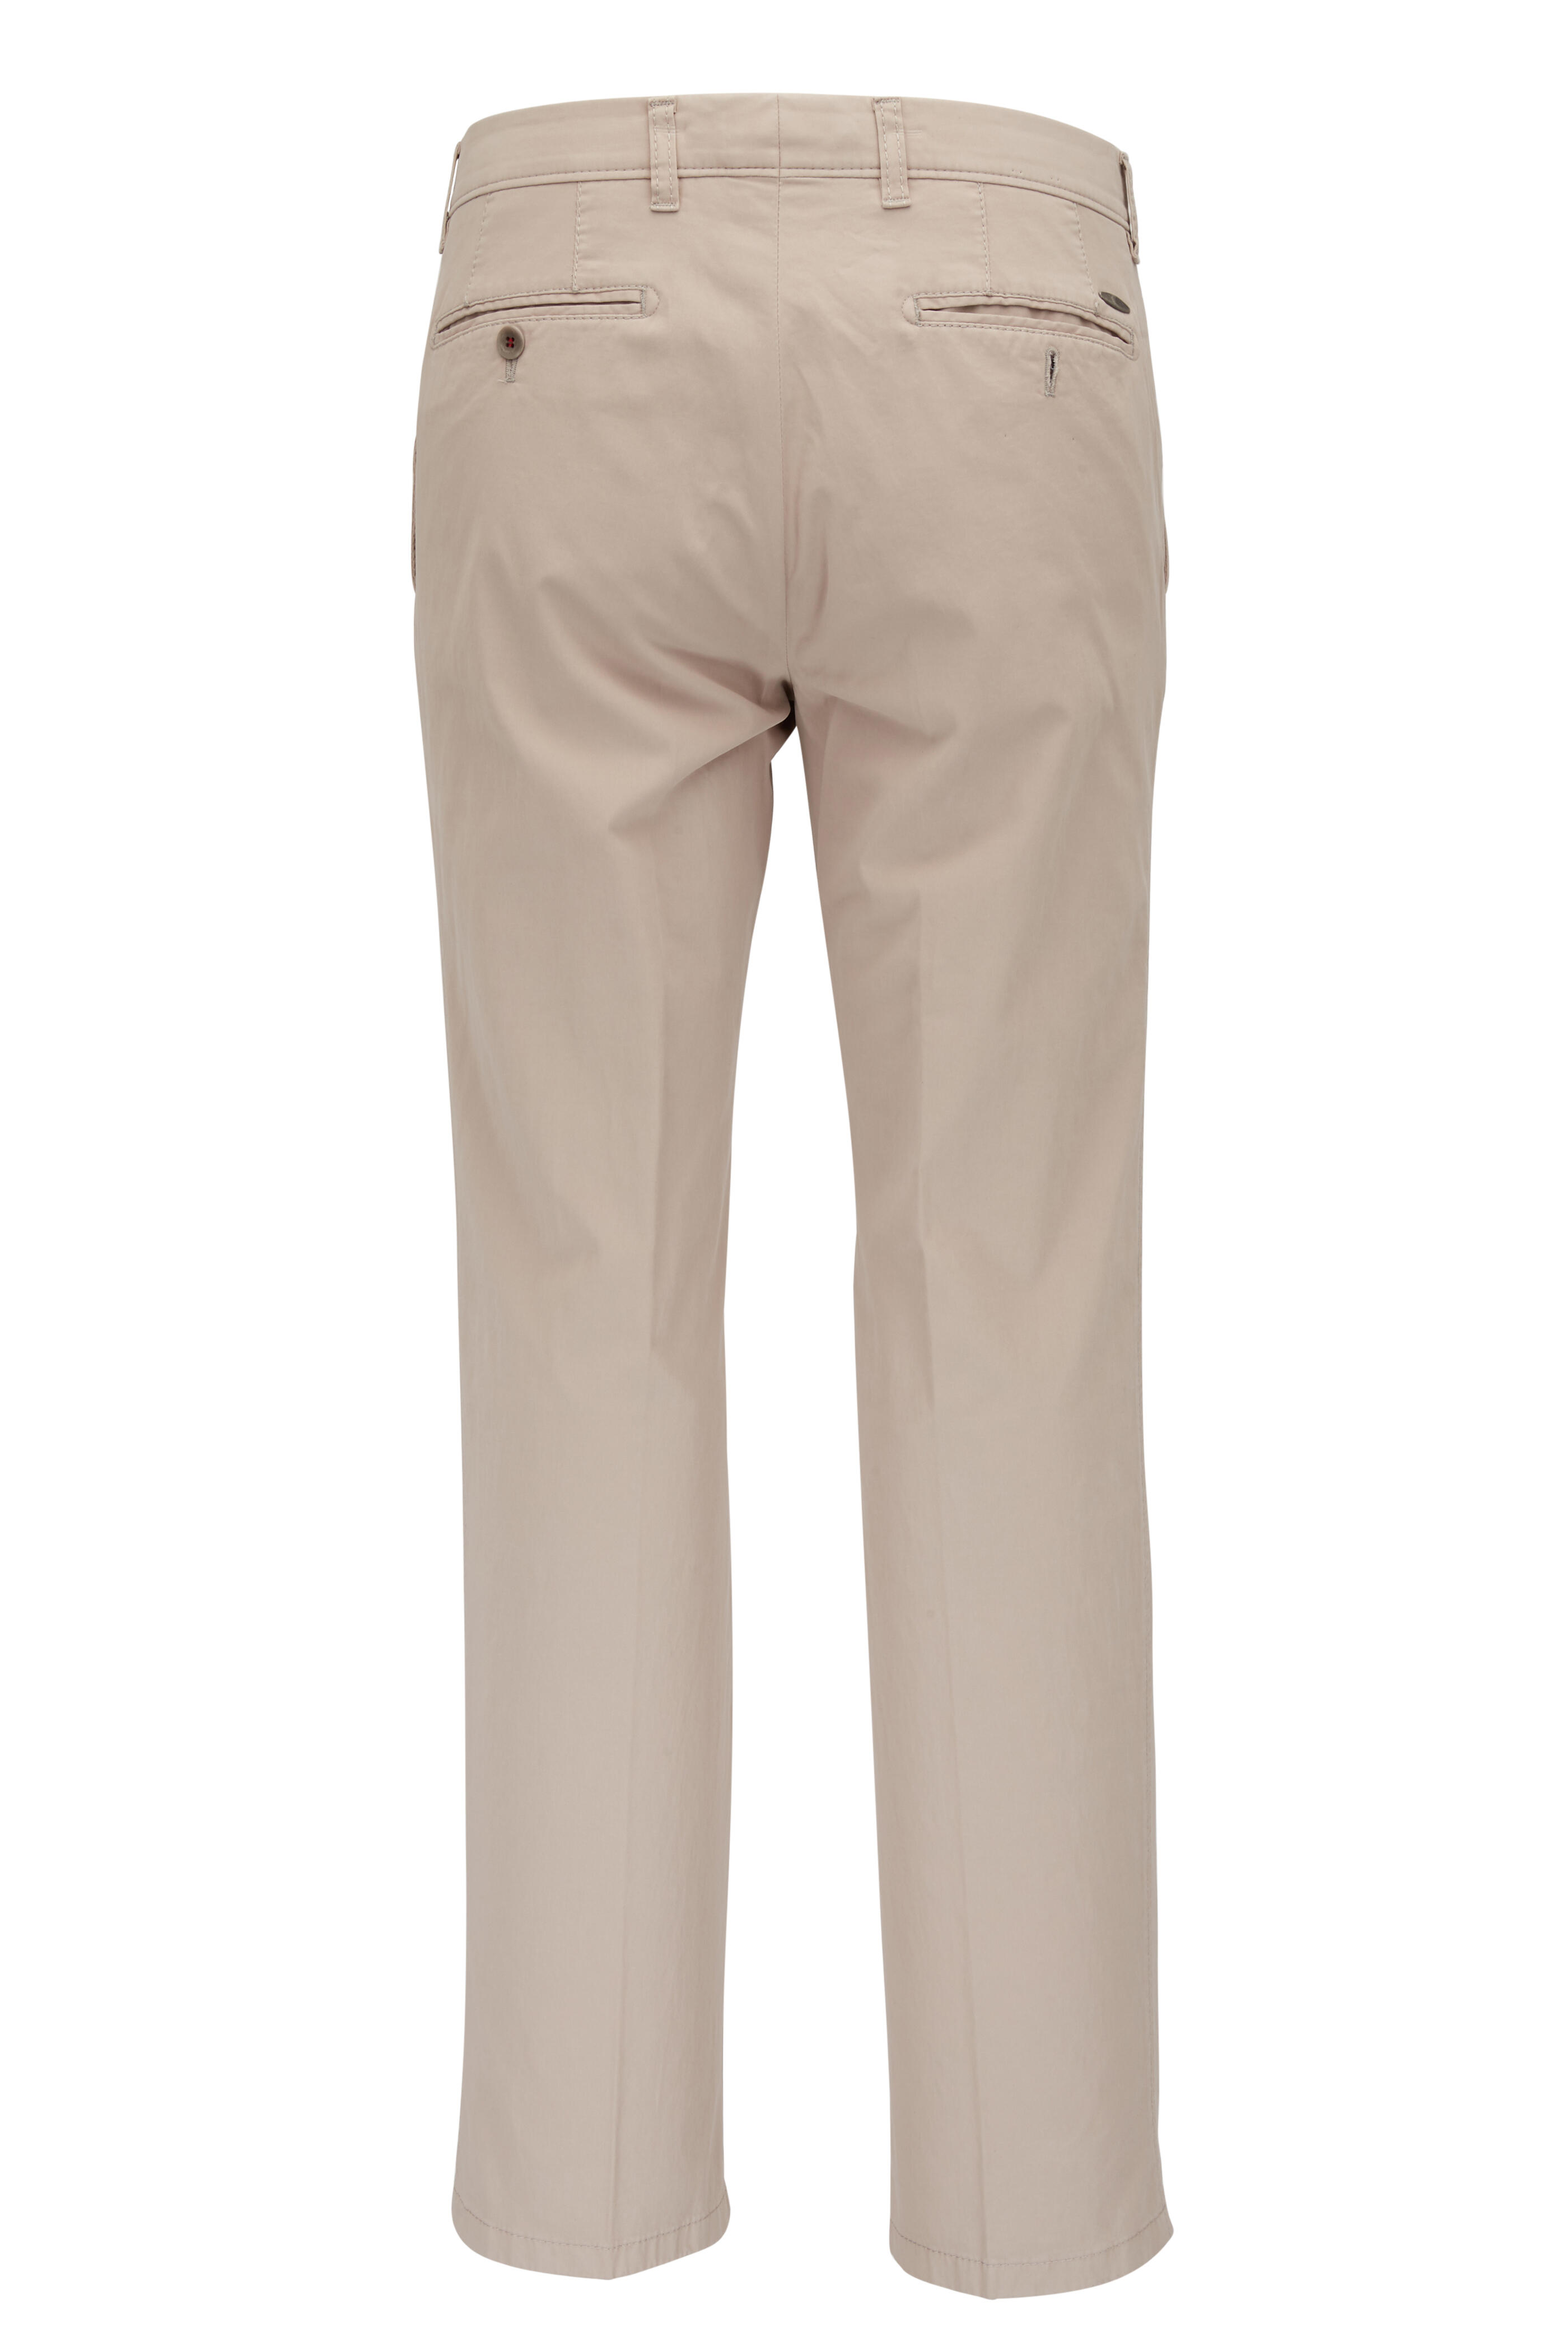 Brax - Evans Beige Brushed Cotton Flat Front Pant